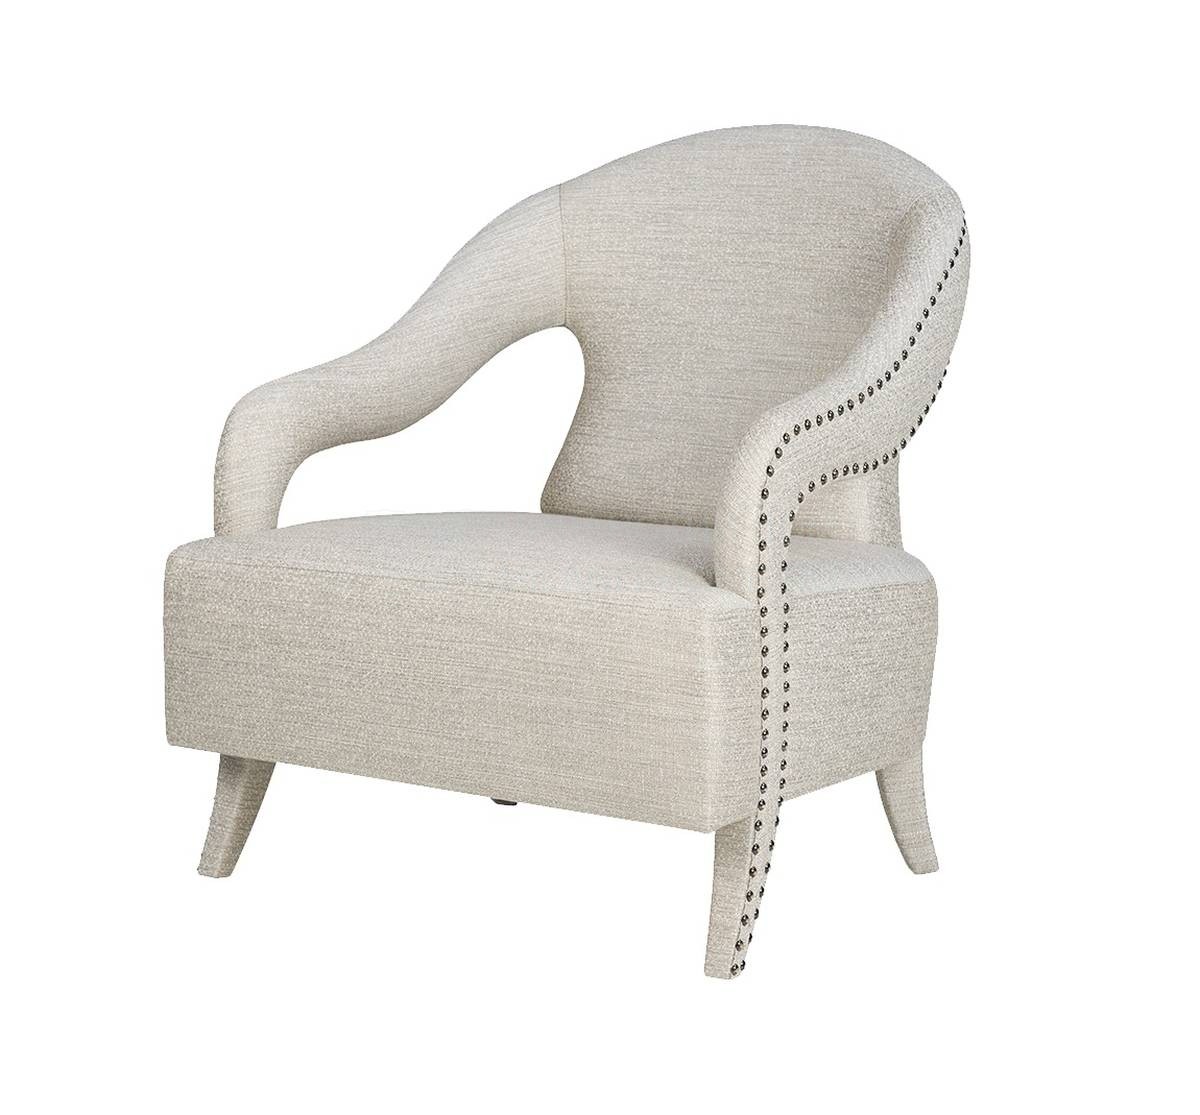 Кресло Cairns armchair из Португалии фабрики FRATO